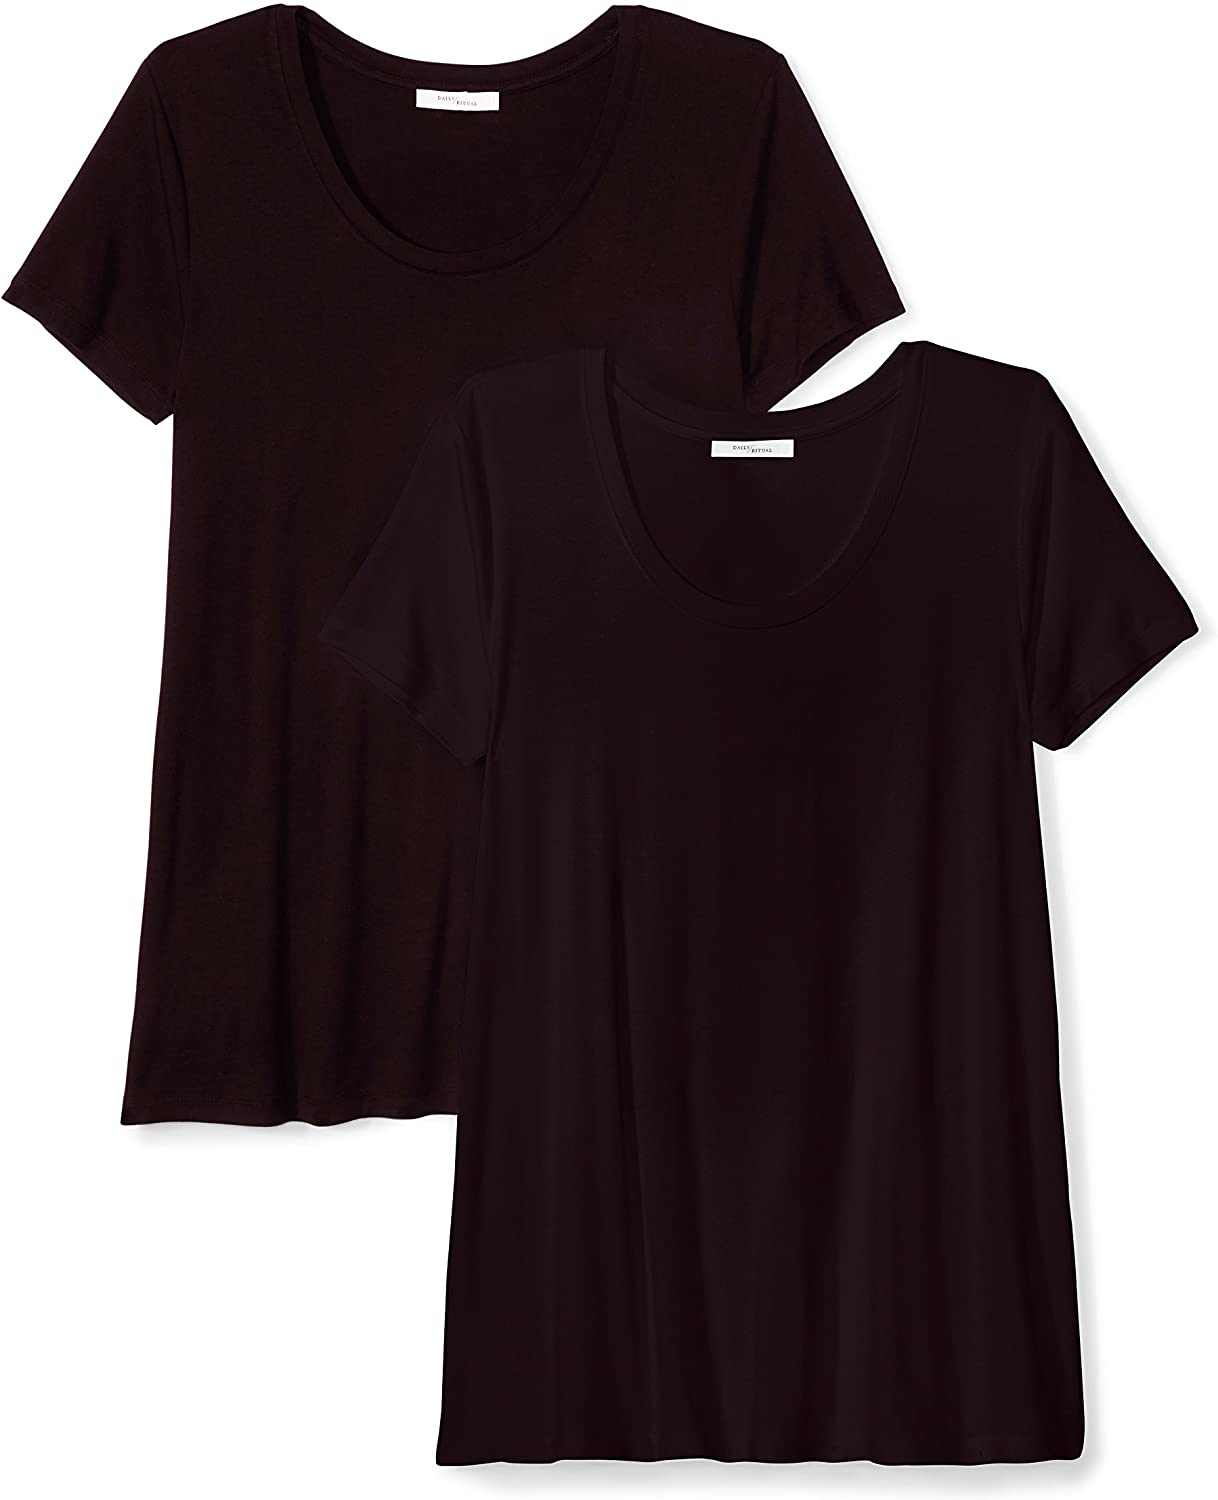 Price:$4.75    Amazon Brand - Daily Ritual Women's Jersey Short-Sleeve Scoop Neck Swing T-Shirt  Clothing